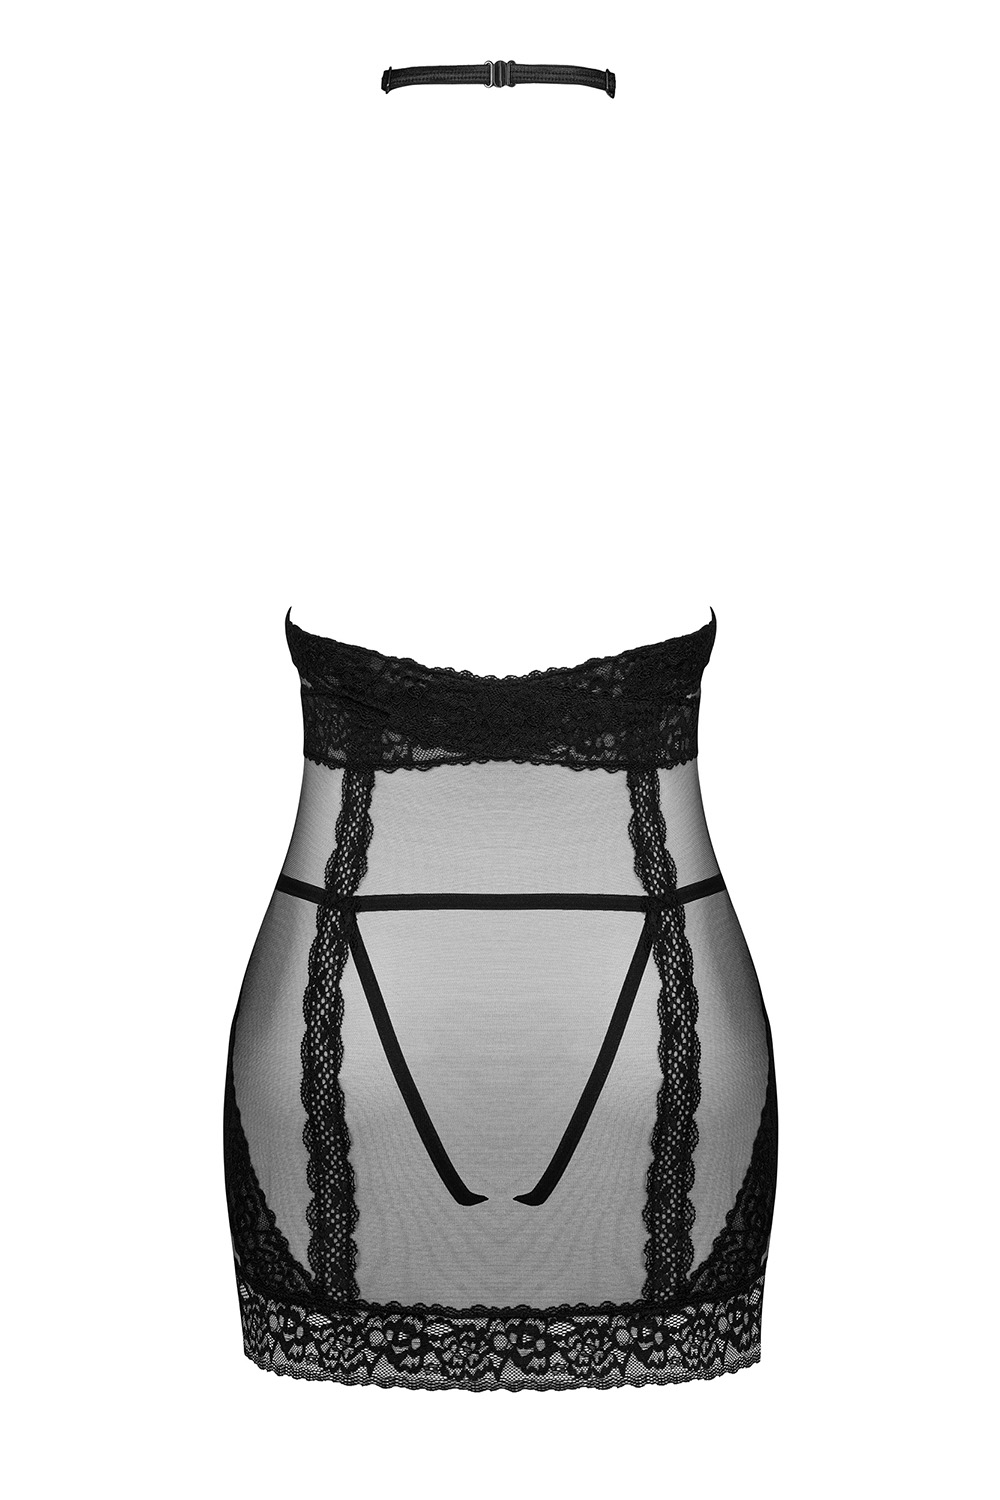 Obsessive sexy ladies lingerie set chemise nightdress+string Bowessa ,  Black